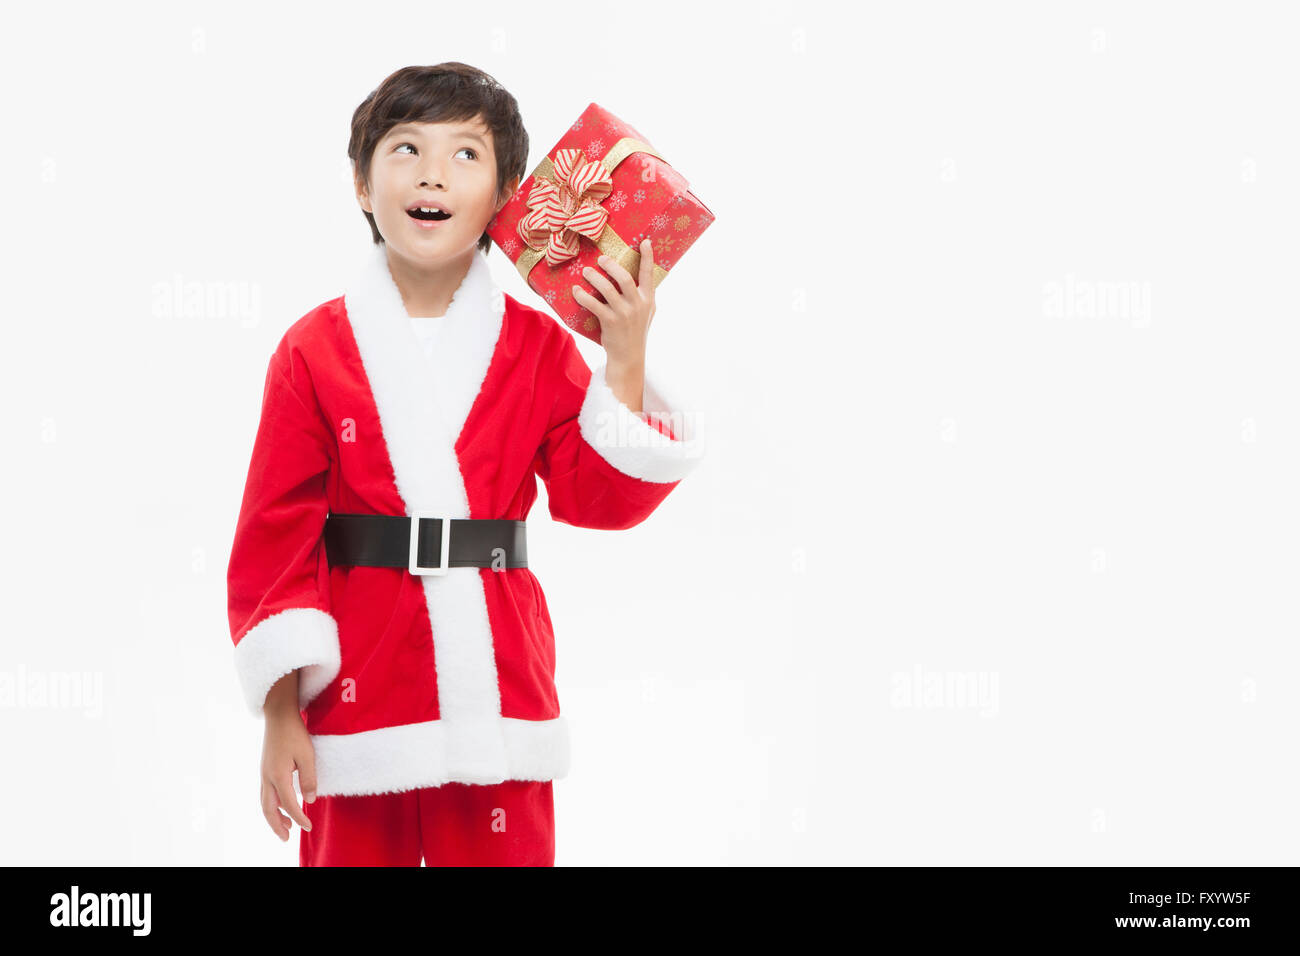 Smiling boy in Santa's clothes holding présente un fort looking up Banque D'Images